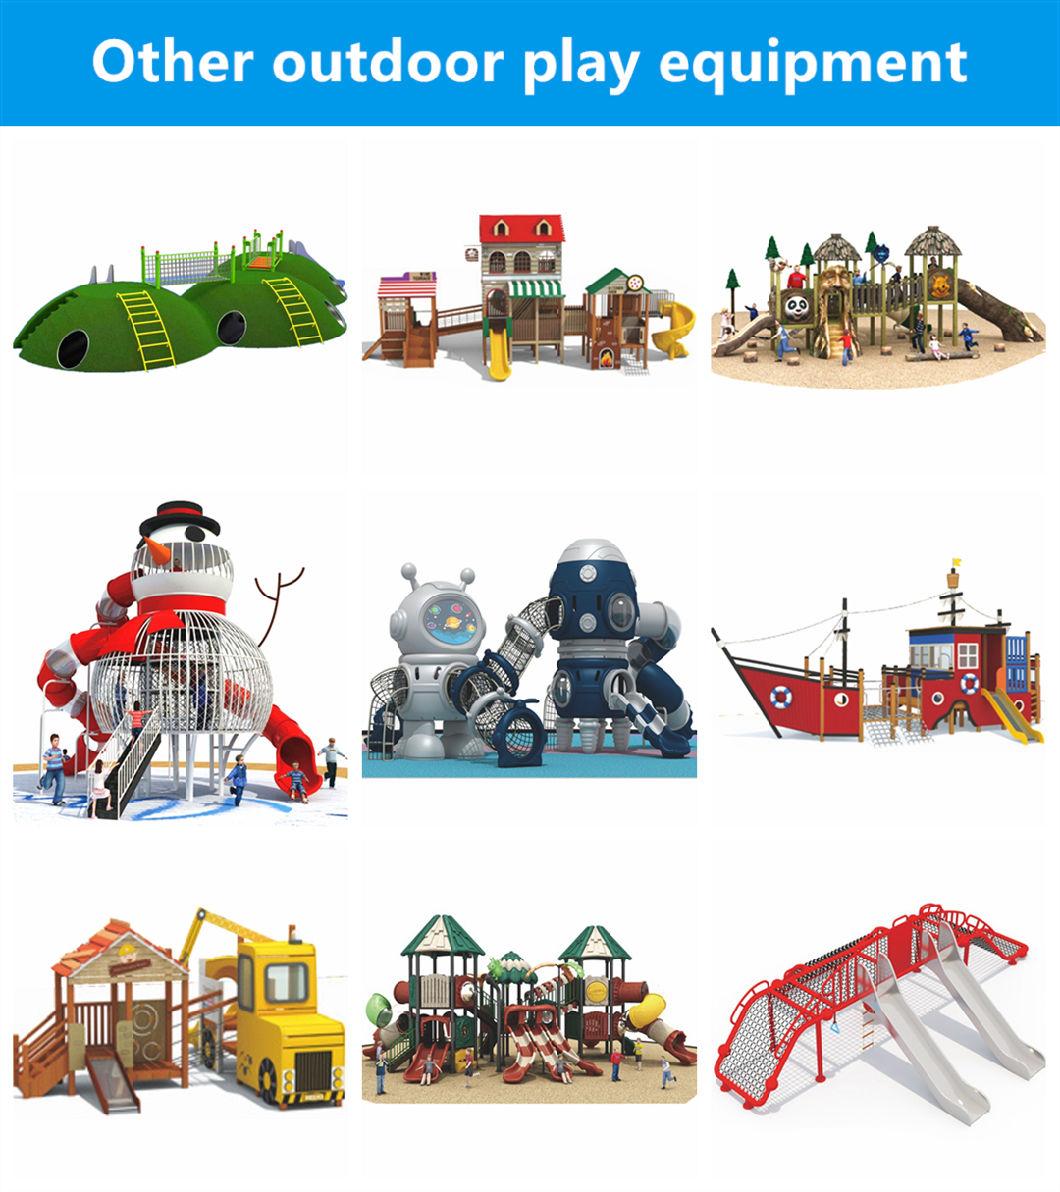 New Amusement Park Kids Outdoor Playground Climbing Frame Equipment